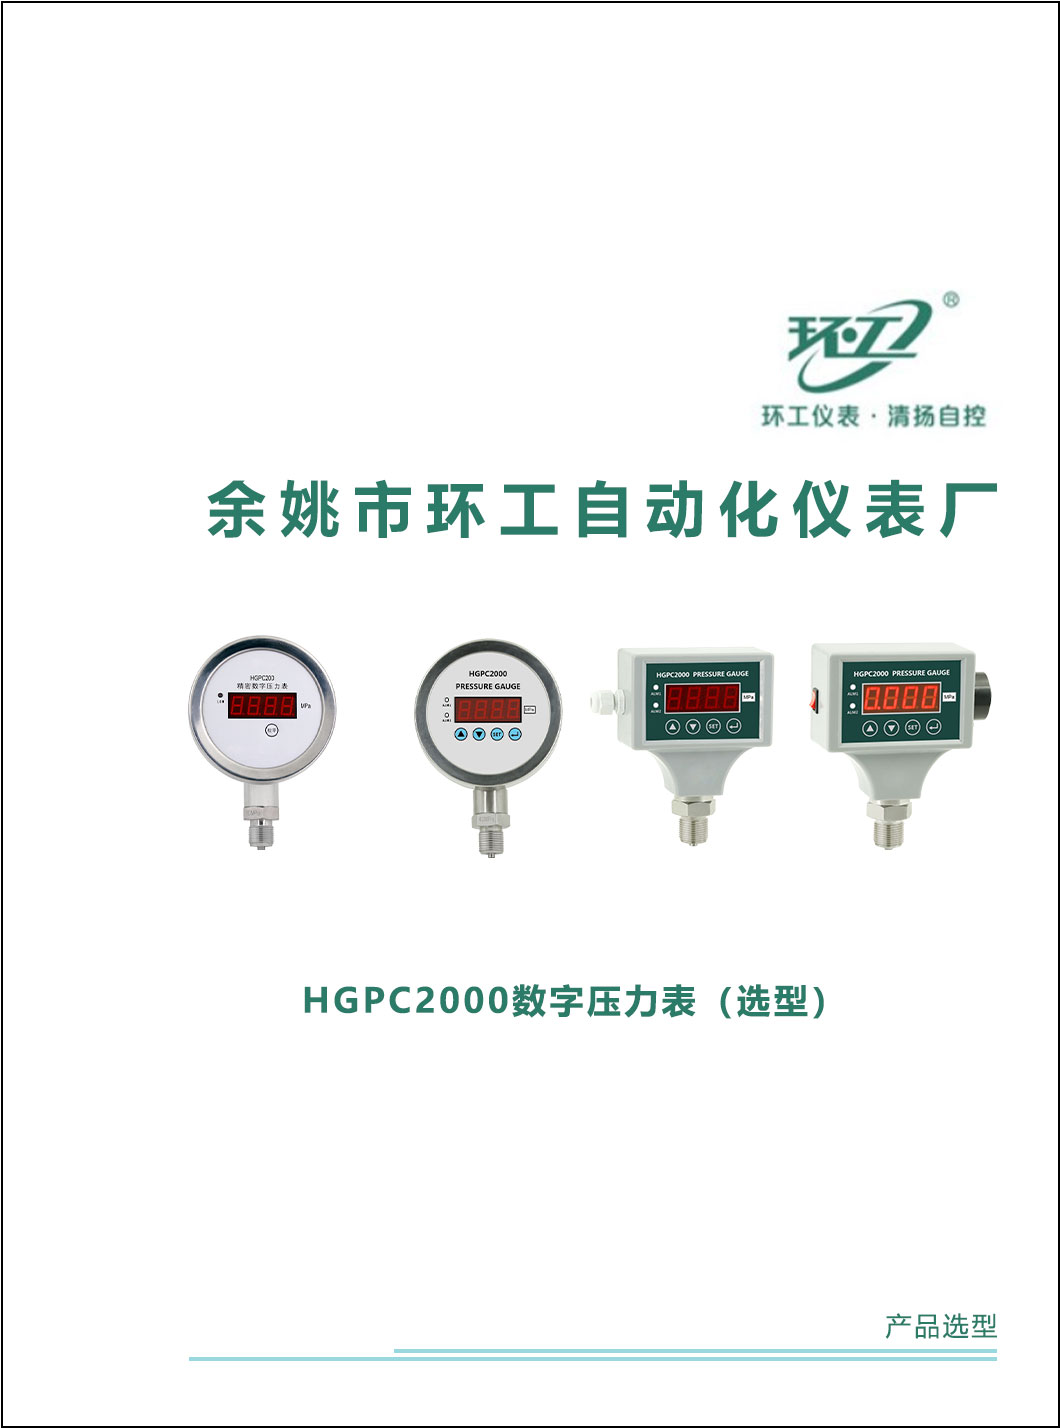 HGPC2000数字压力表-环工仪表-清扬自控